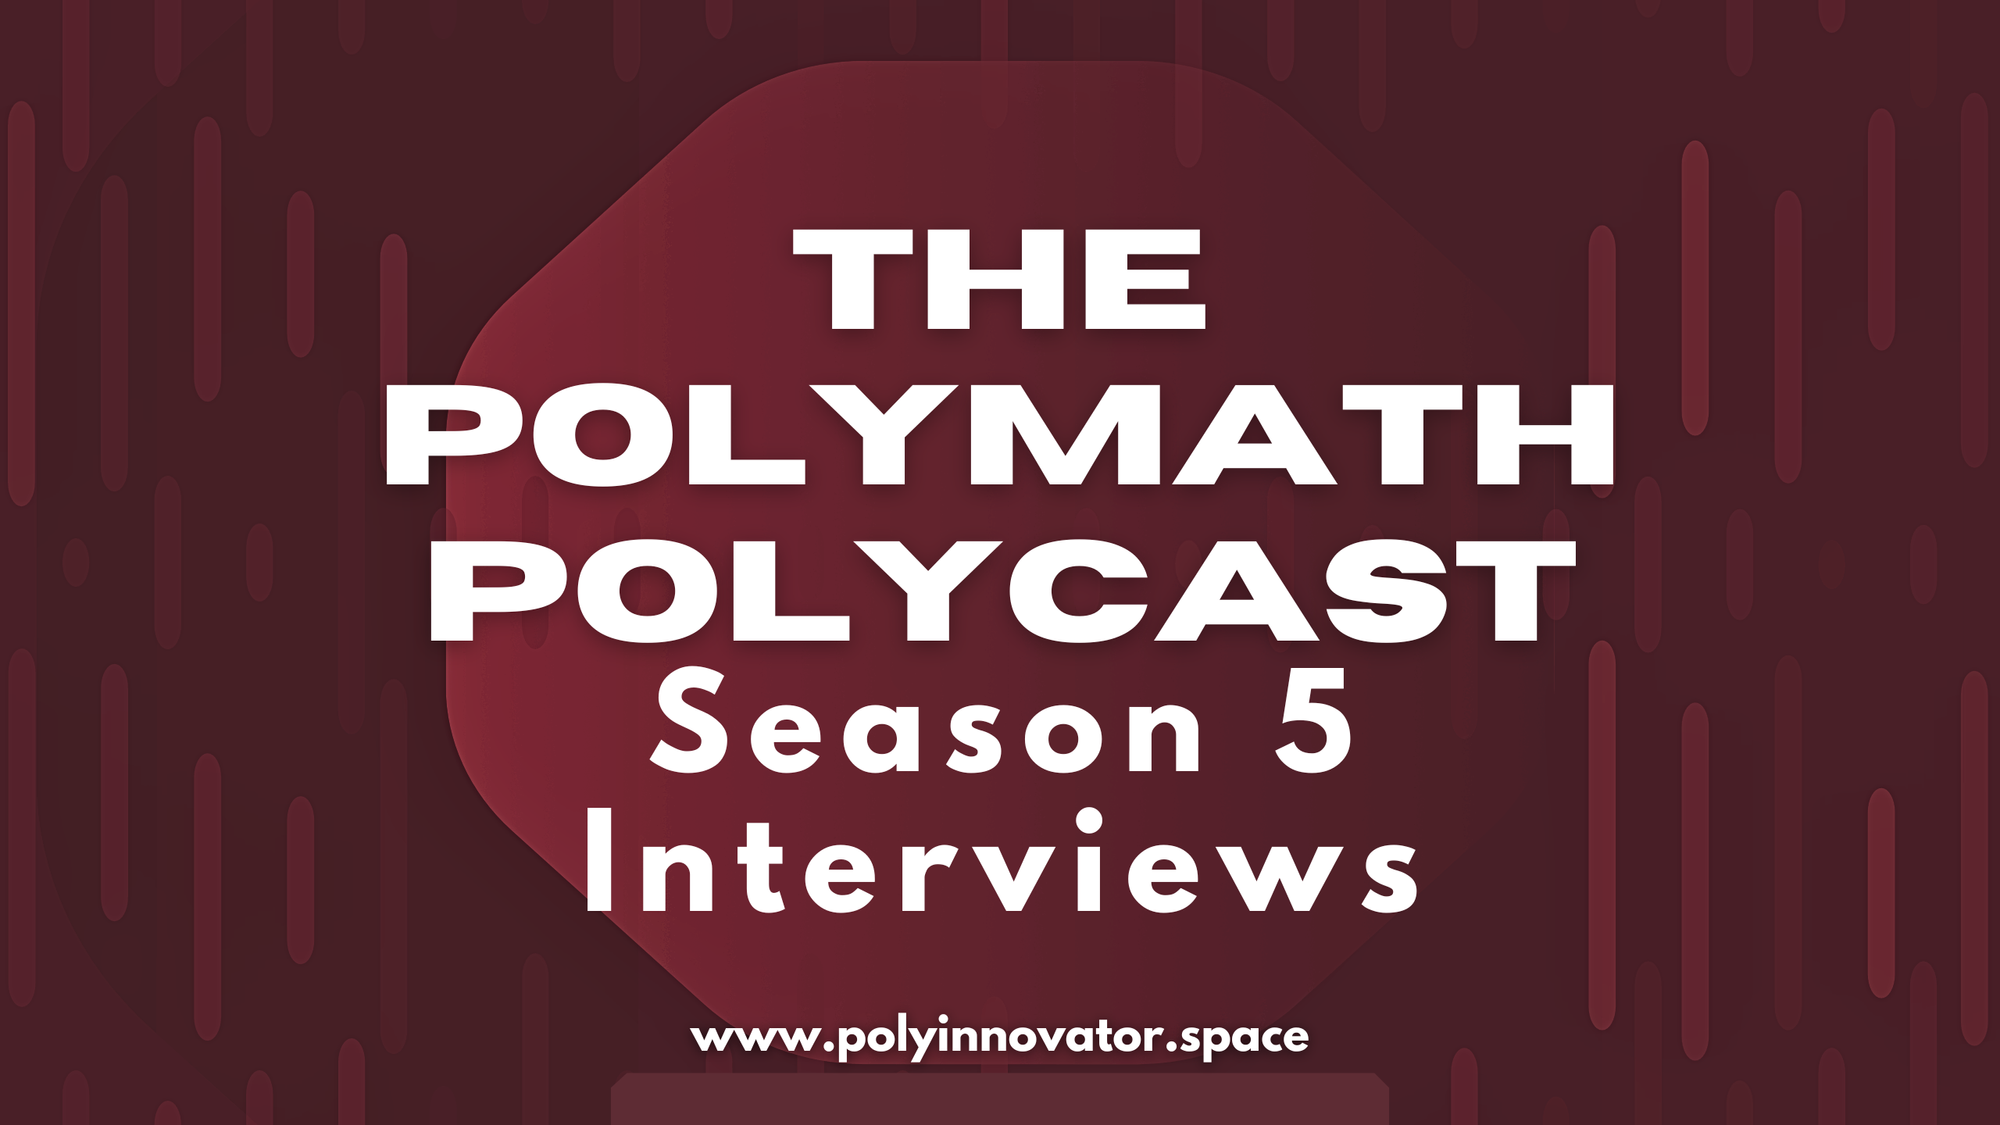 Season Five of The Polymath Polycast Interviews